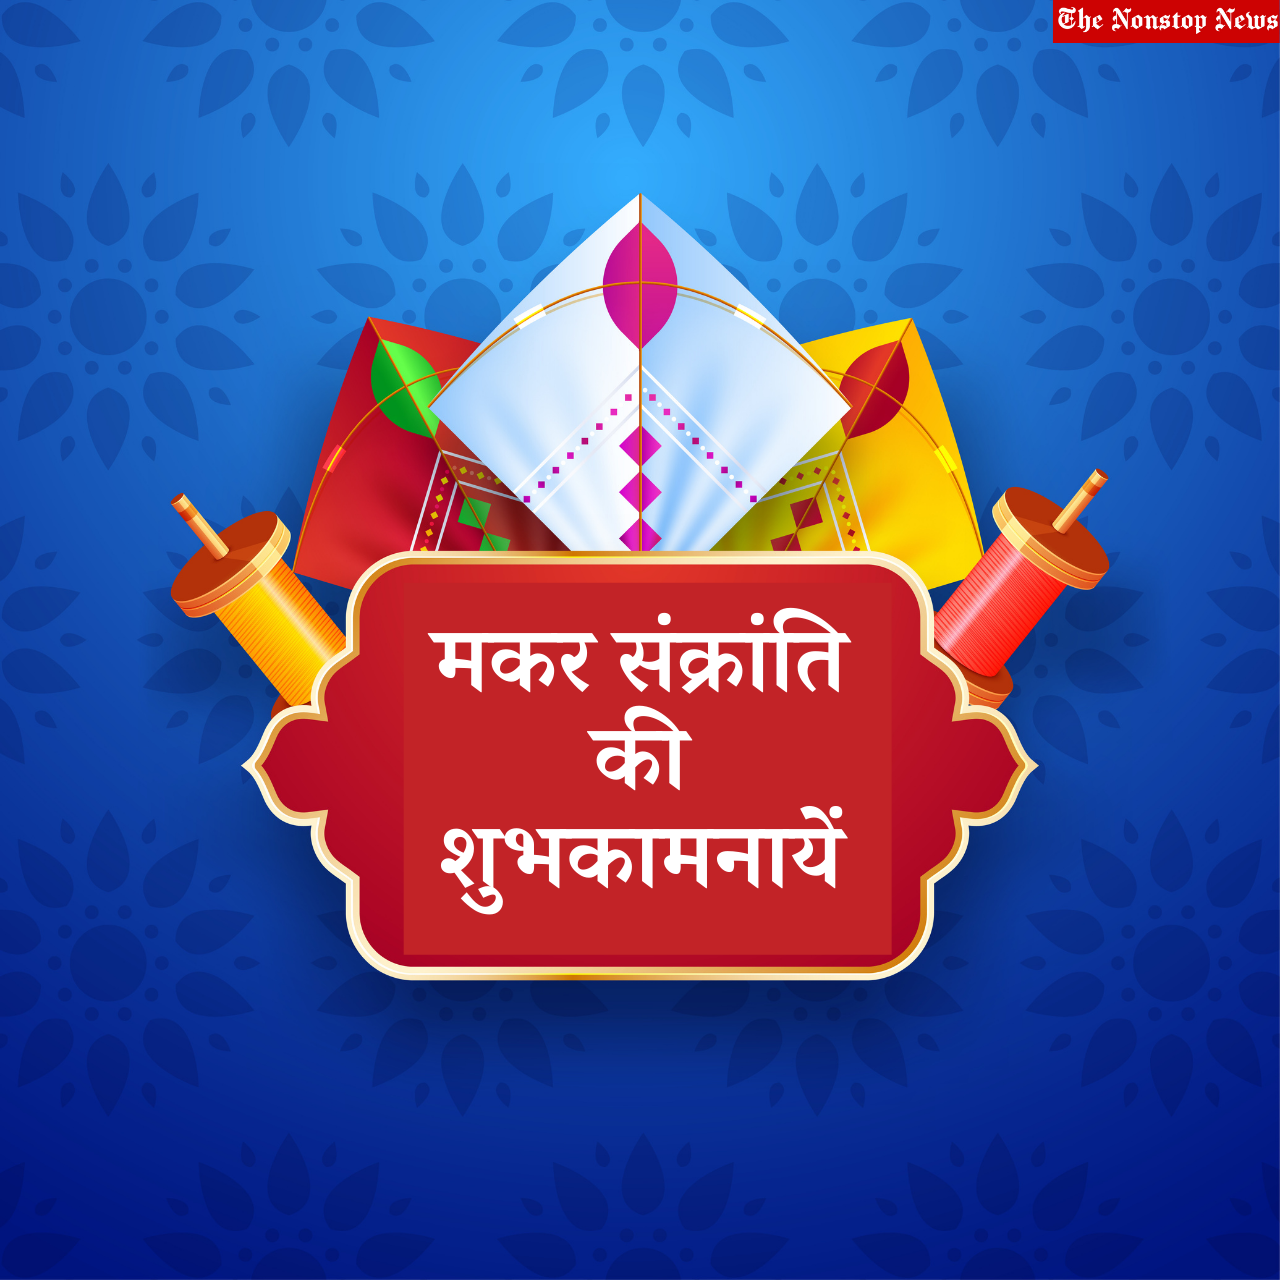 Makar Sankranti 2022 Hindi Wishes, Quotes, HD Images, Messages, Greetings, Shayari, Status to greet Friends and Family